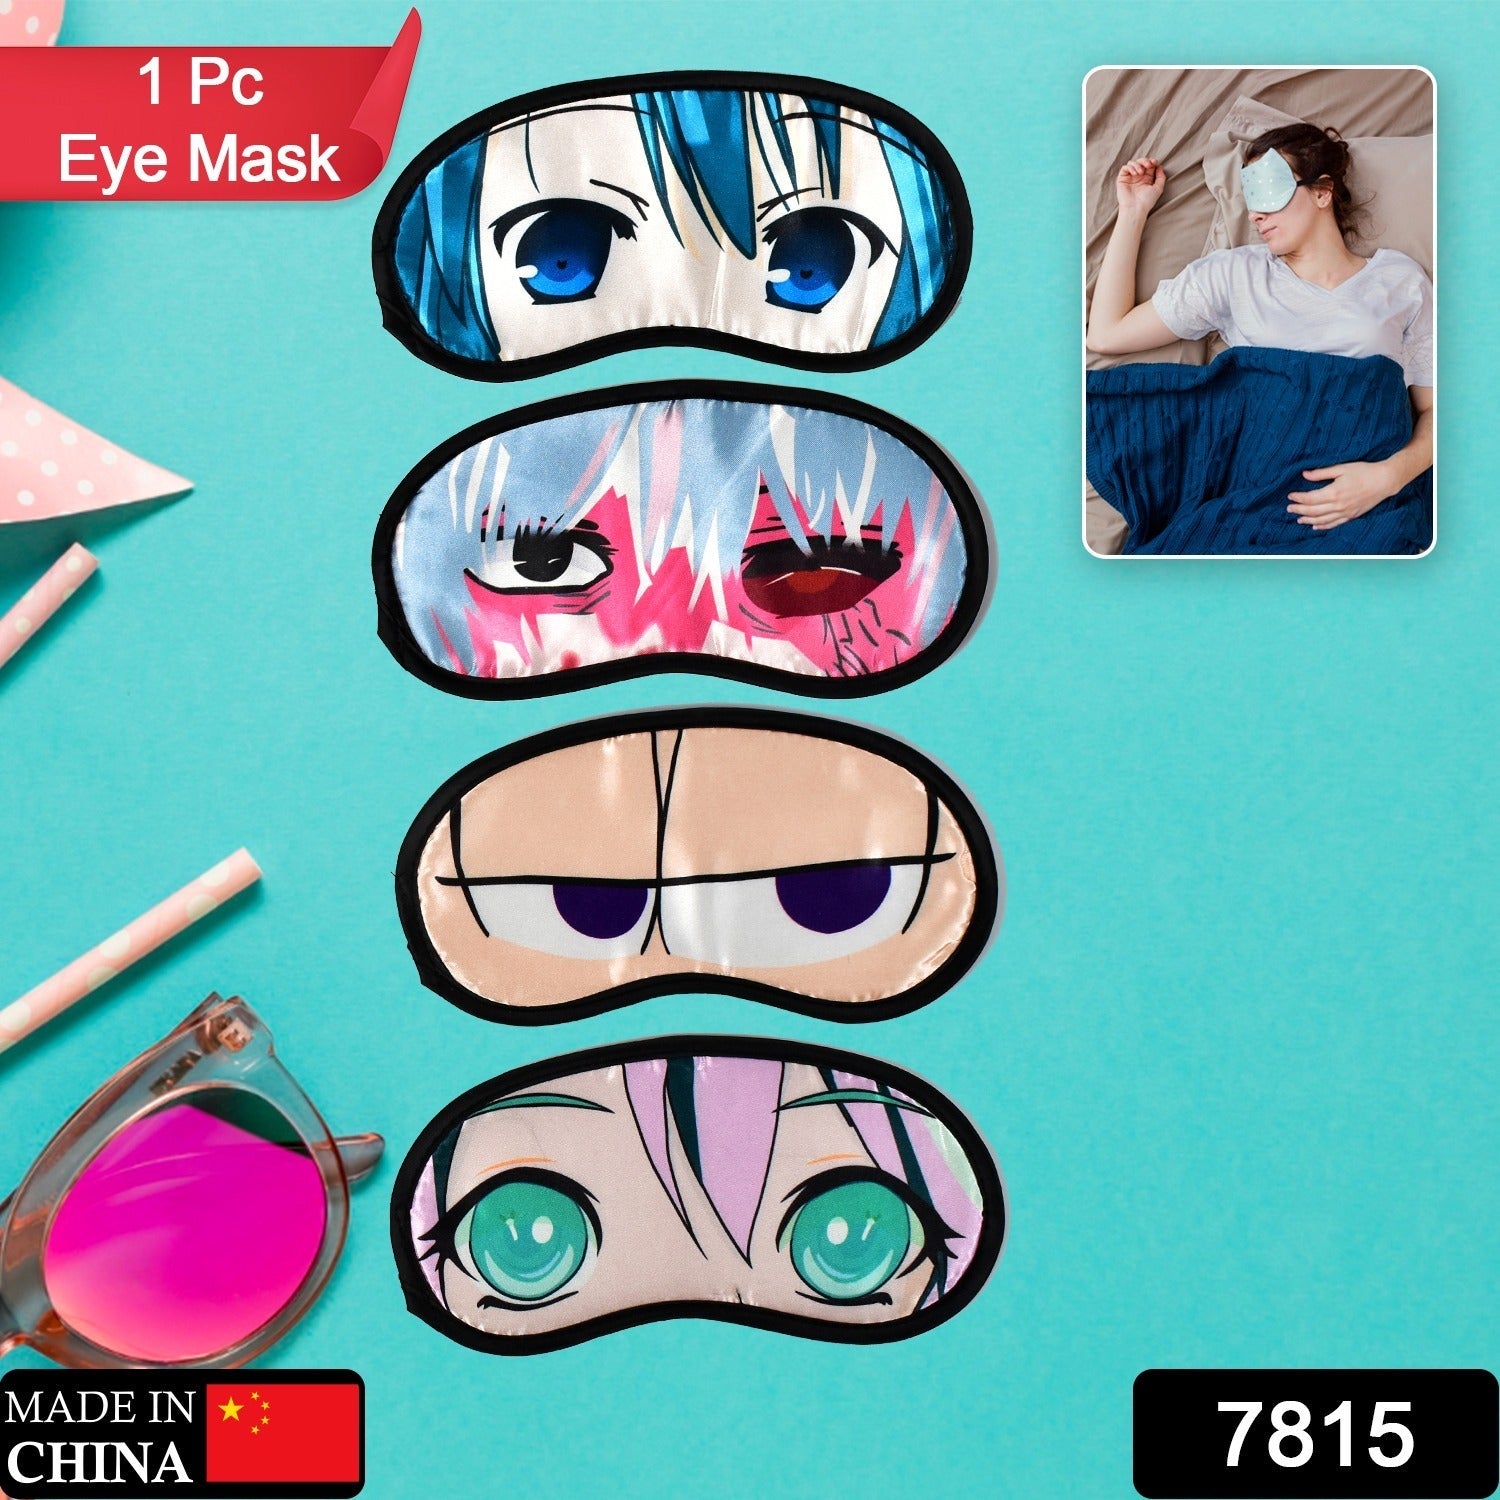 7815 Super Soft Sleeping Mask Blind Fold for Comfortable Sleep Travelling Sleep Mask Heavy Comfortable Material Eye Mask ( 1pc ) DeoDap